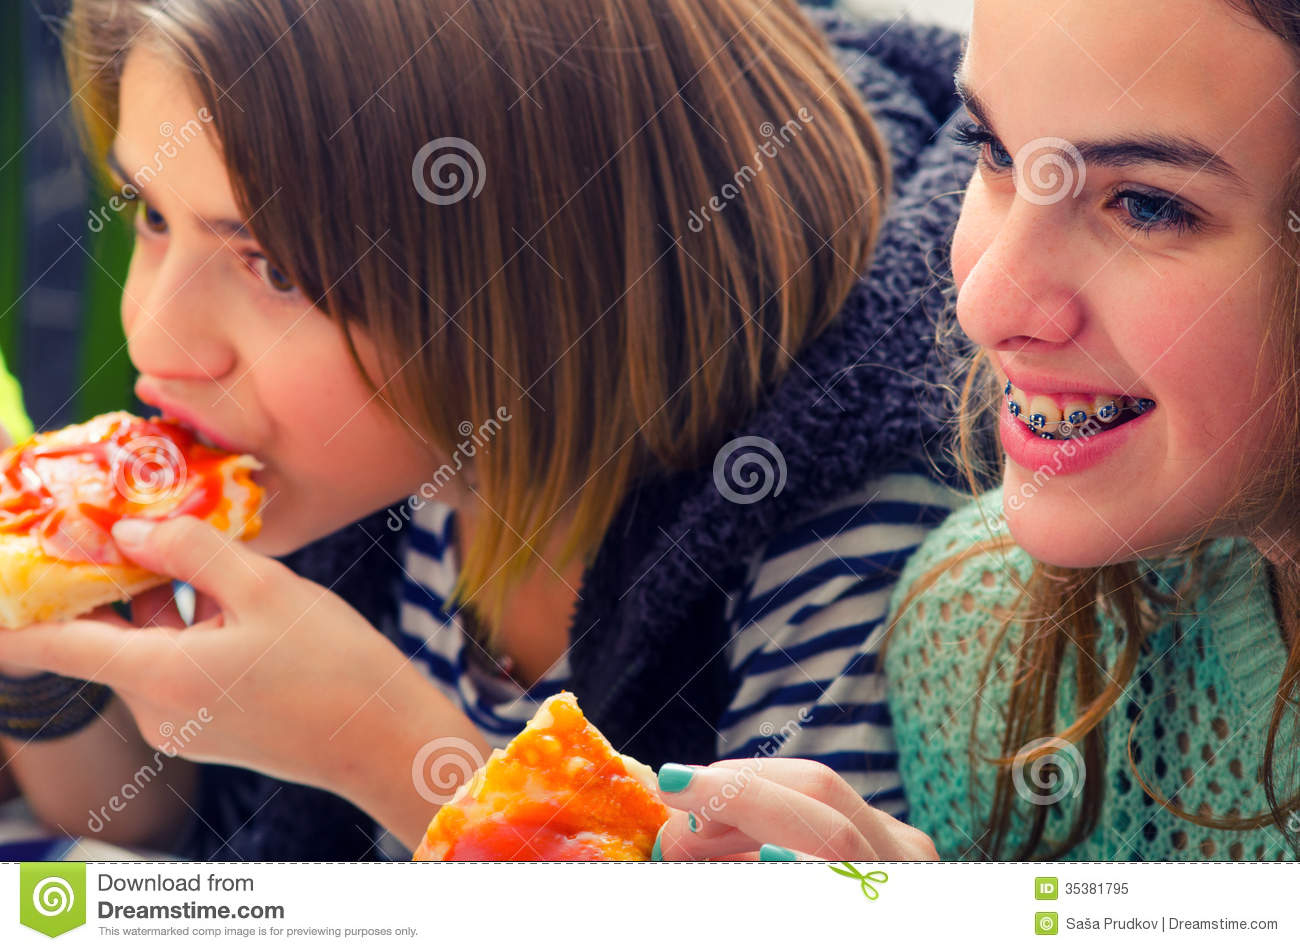 Teenage Girls Eating Pizza Royalty Free Stock Photo   Image  35381795